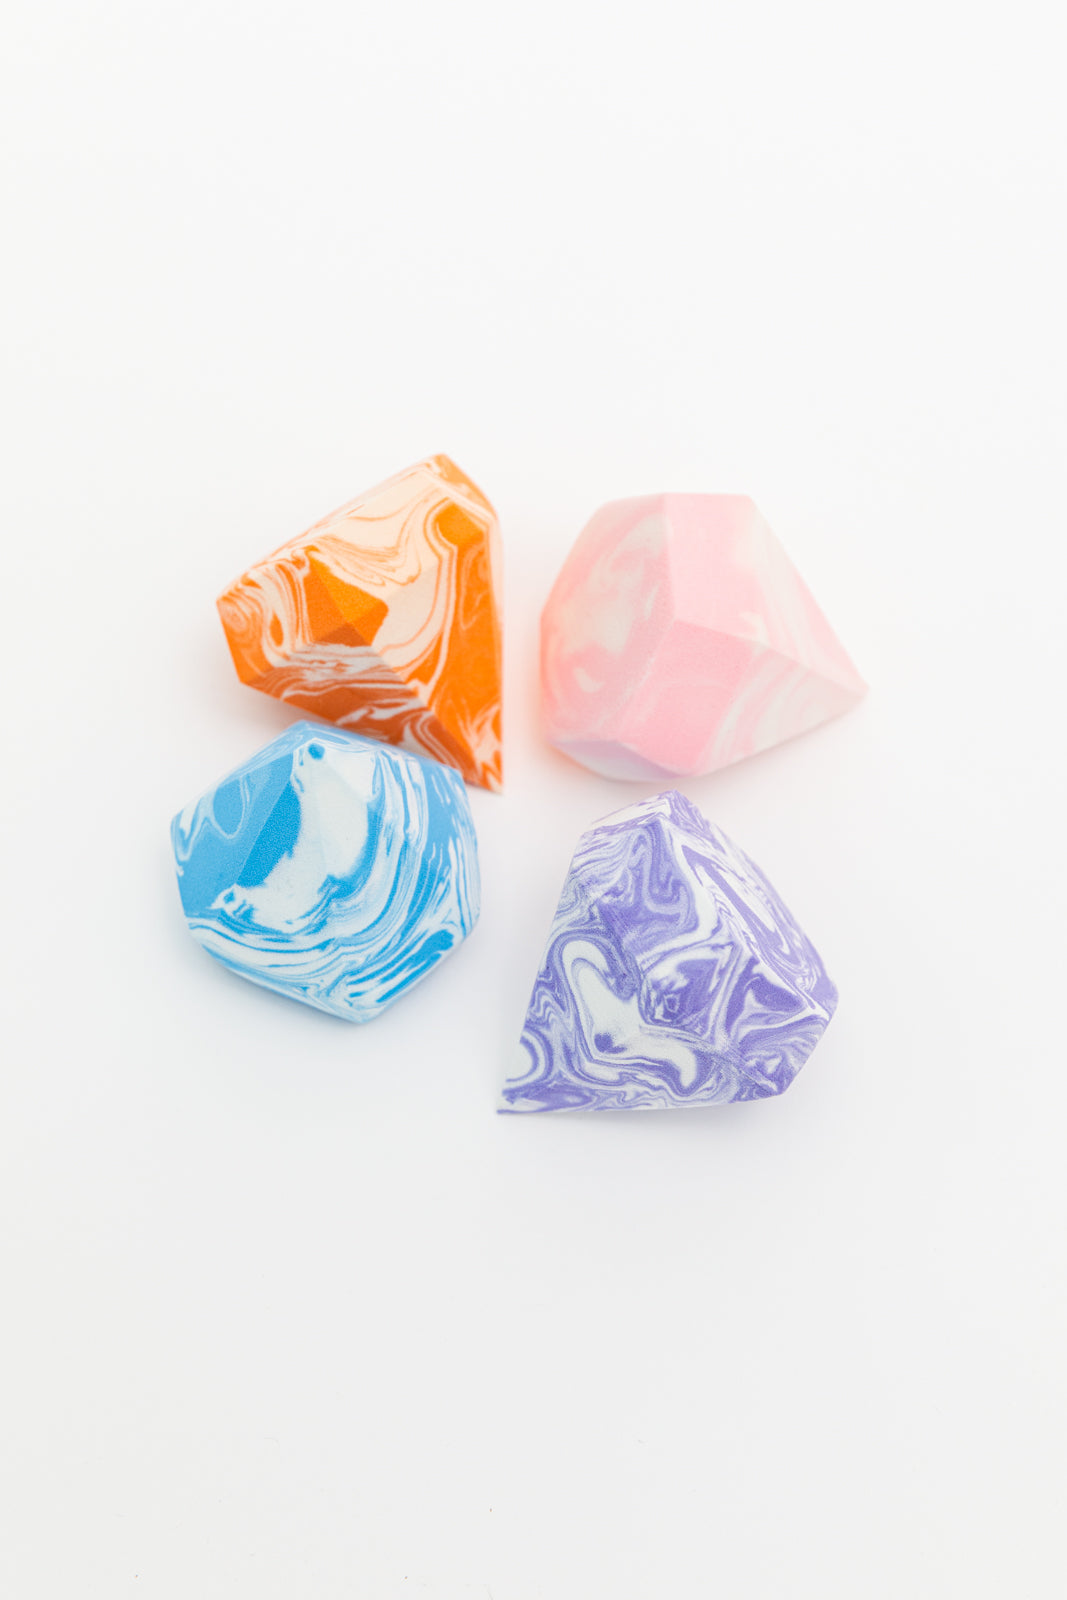 Brand Collab Diamond Makeup Sponge in Four Colors